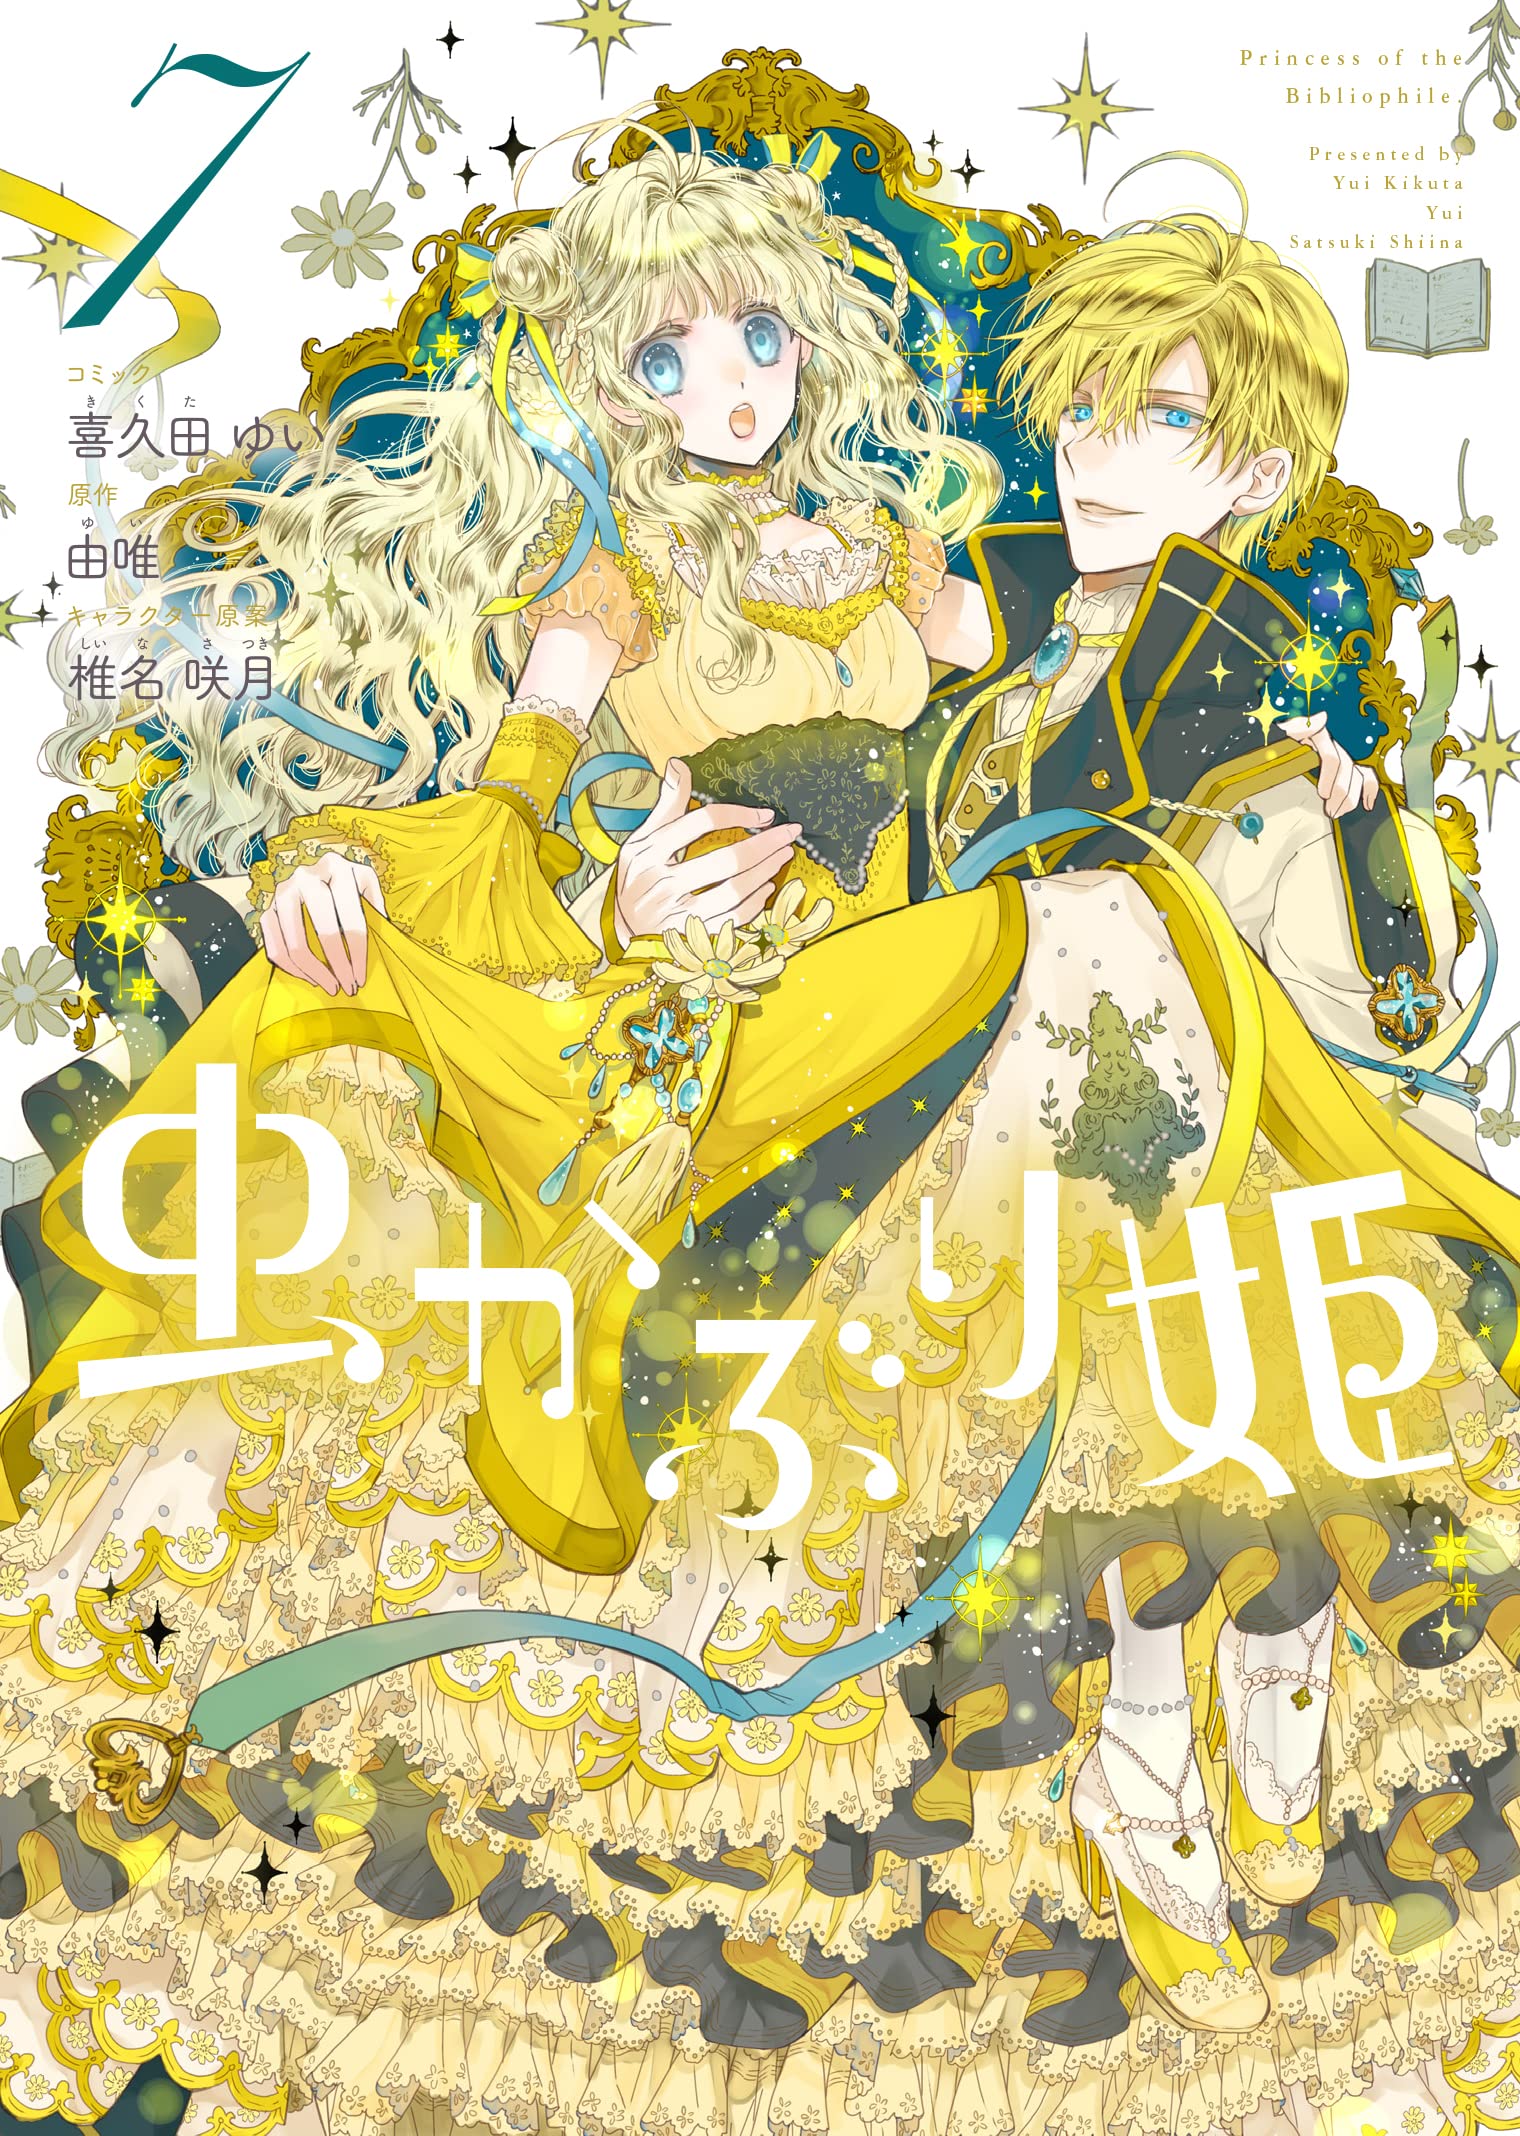 El manga de Mushikaburi-hime revelo de su volumen #7